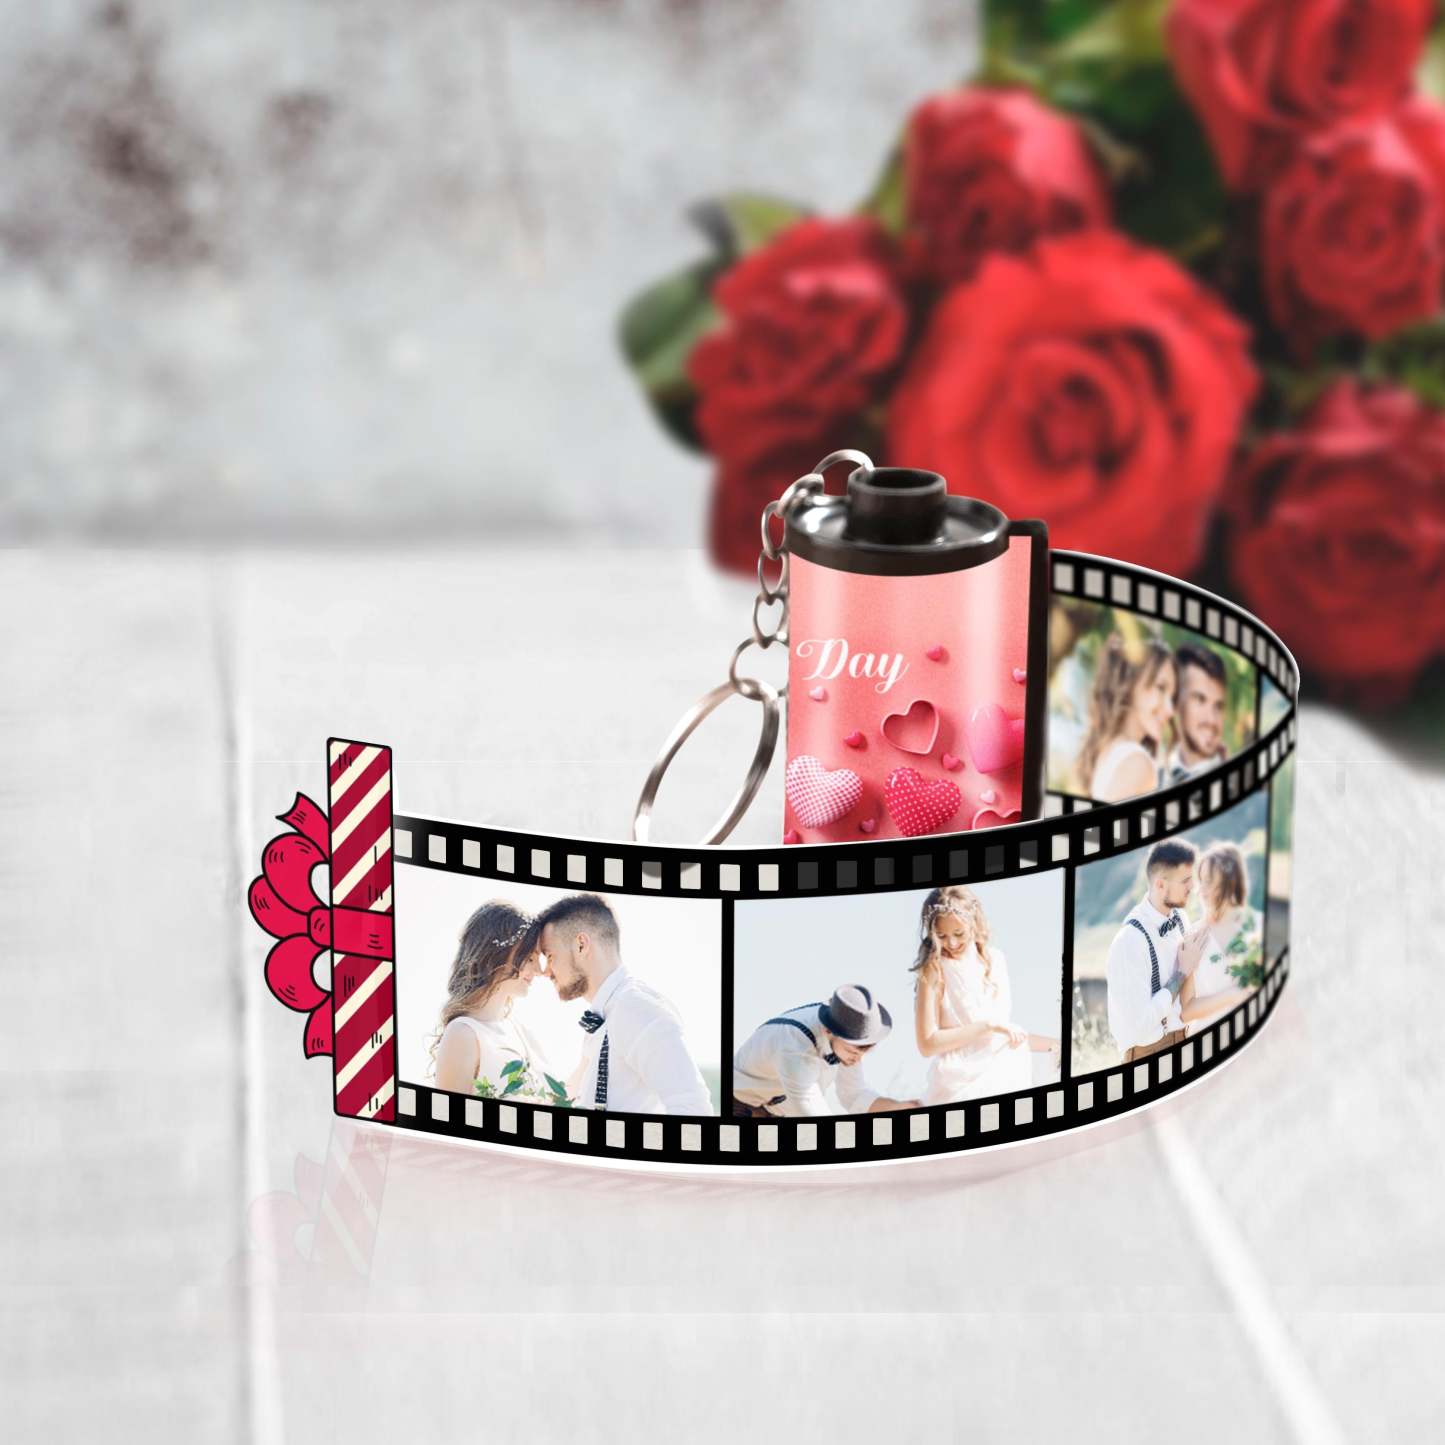 Custom Photo Film Roll Keychain Gift Box Decor Camera Keychain Valentine's Day Gifts For Couples - mymoonlampau